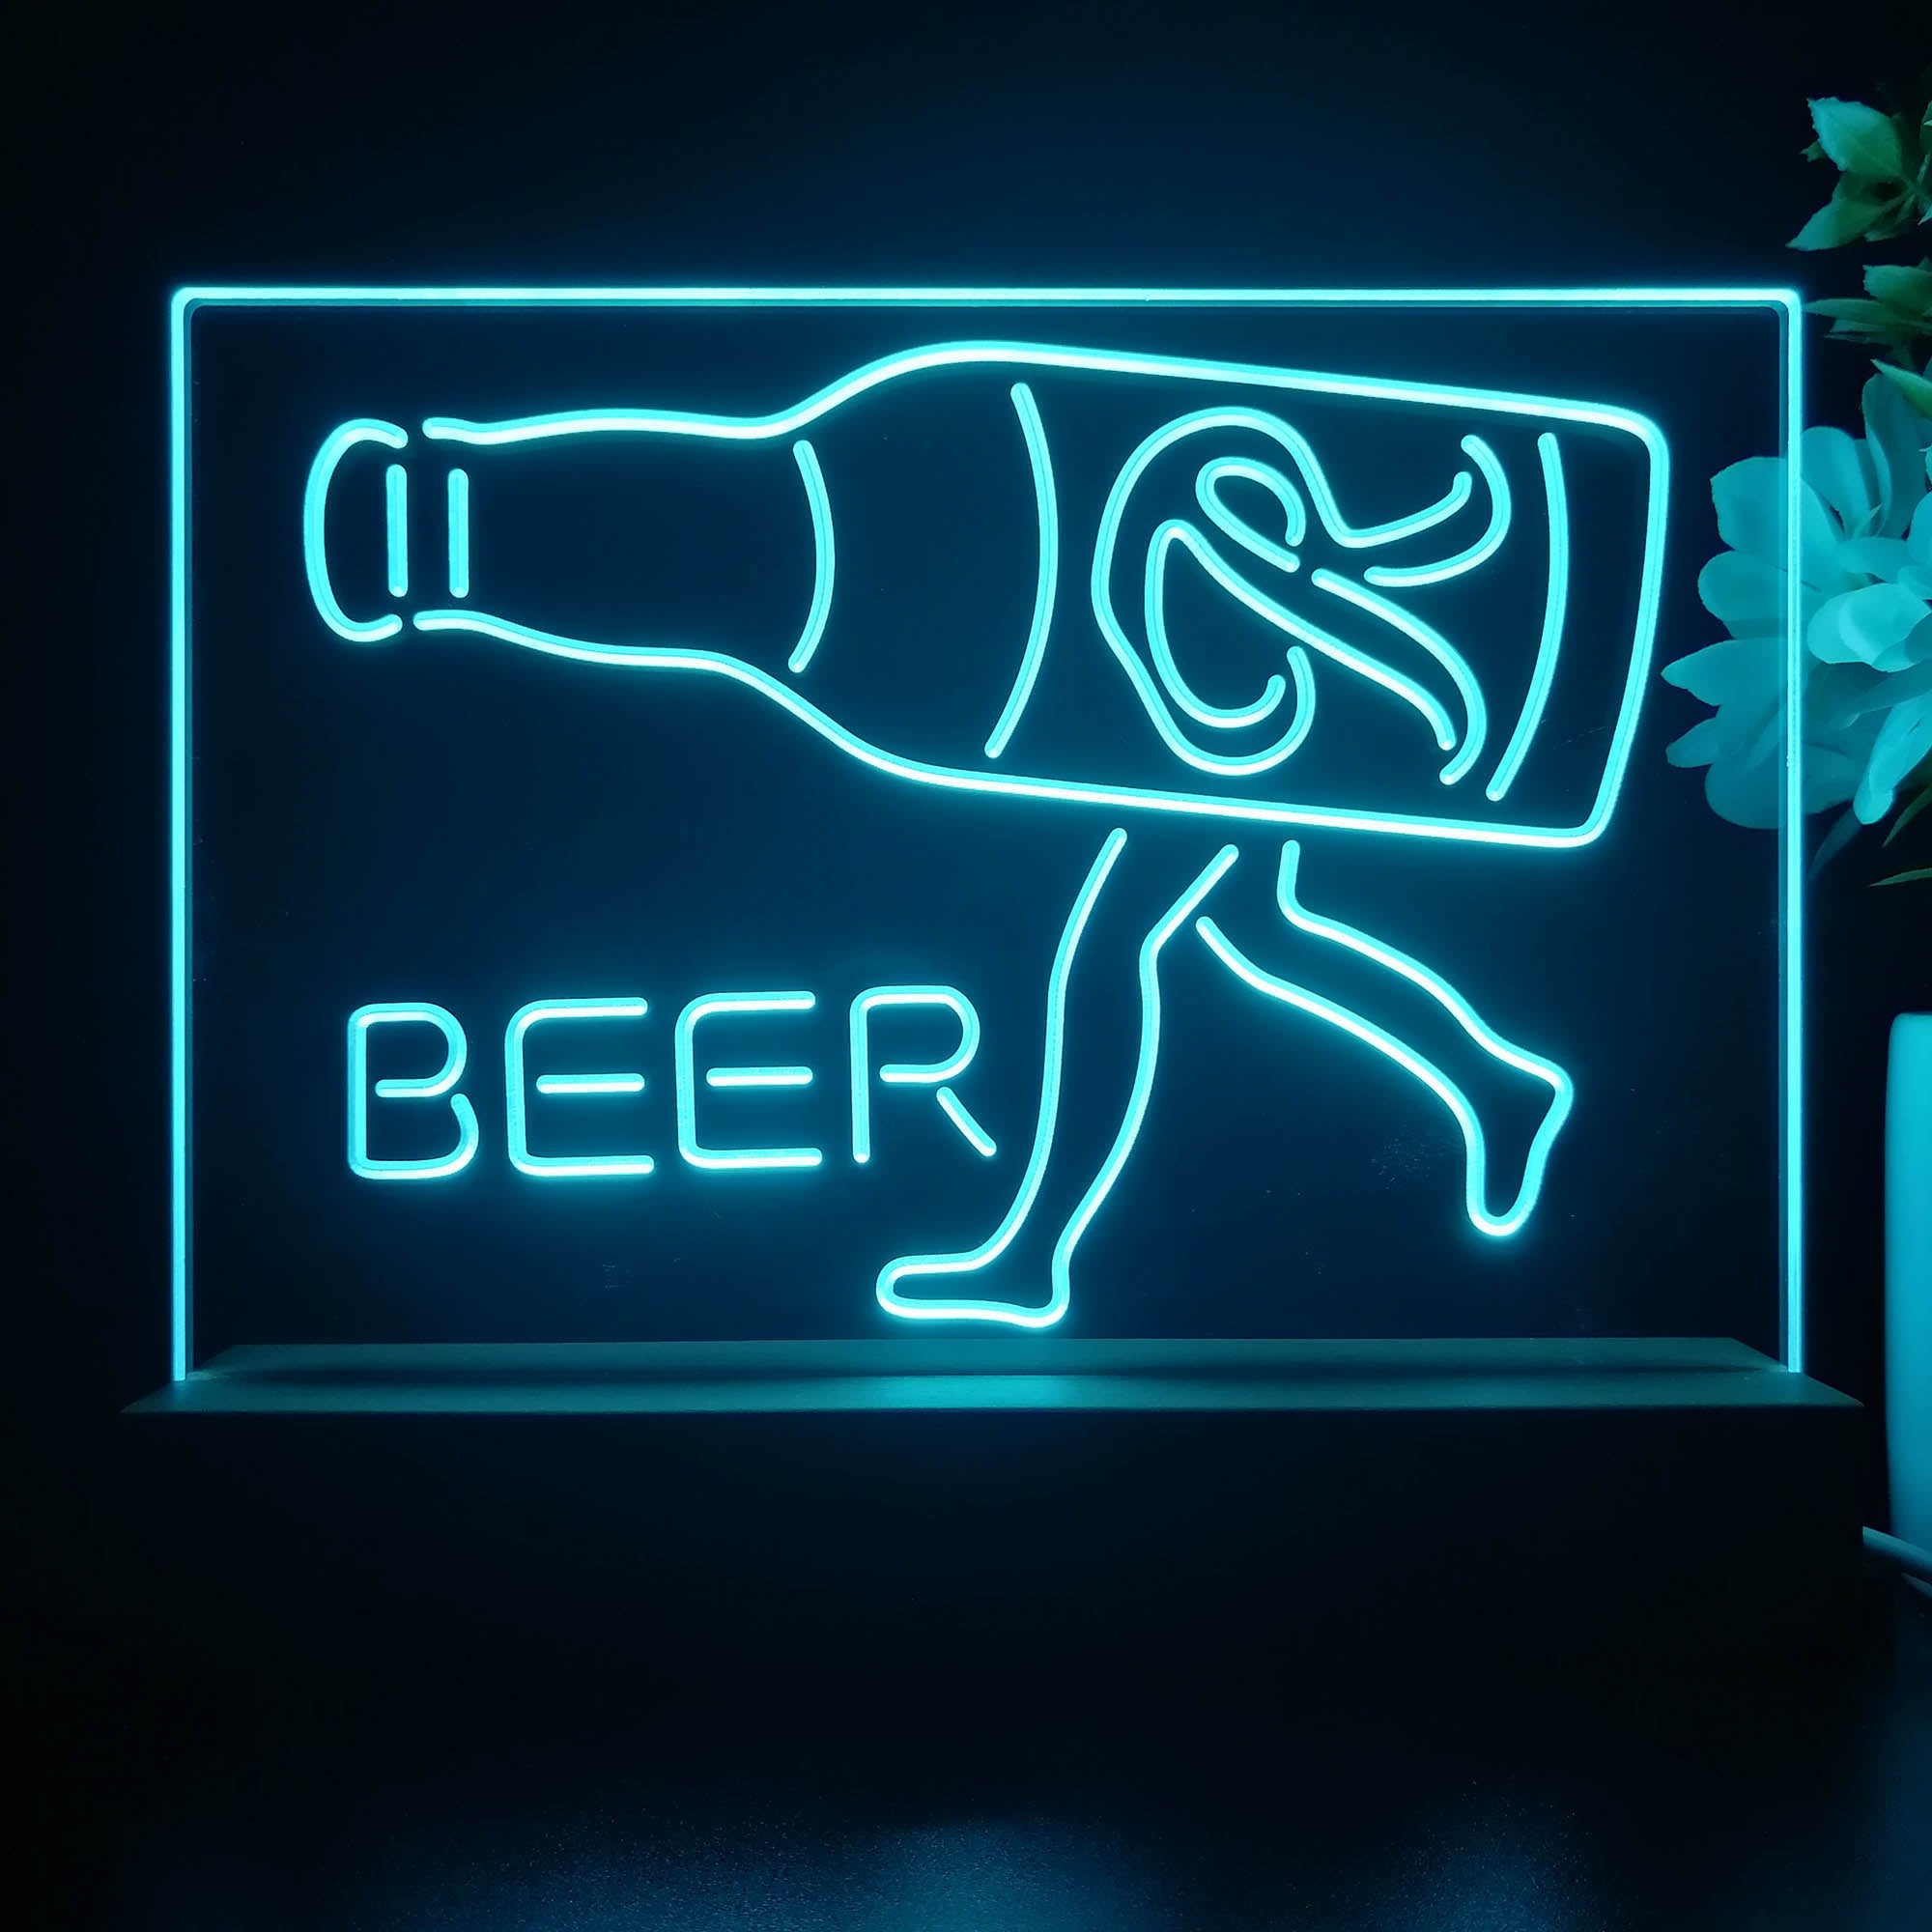 Rainier Beer Garage Man Cave Bar Neon Sign Pub Bar Lamp